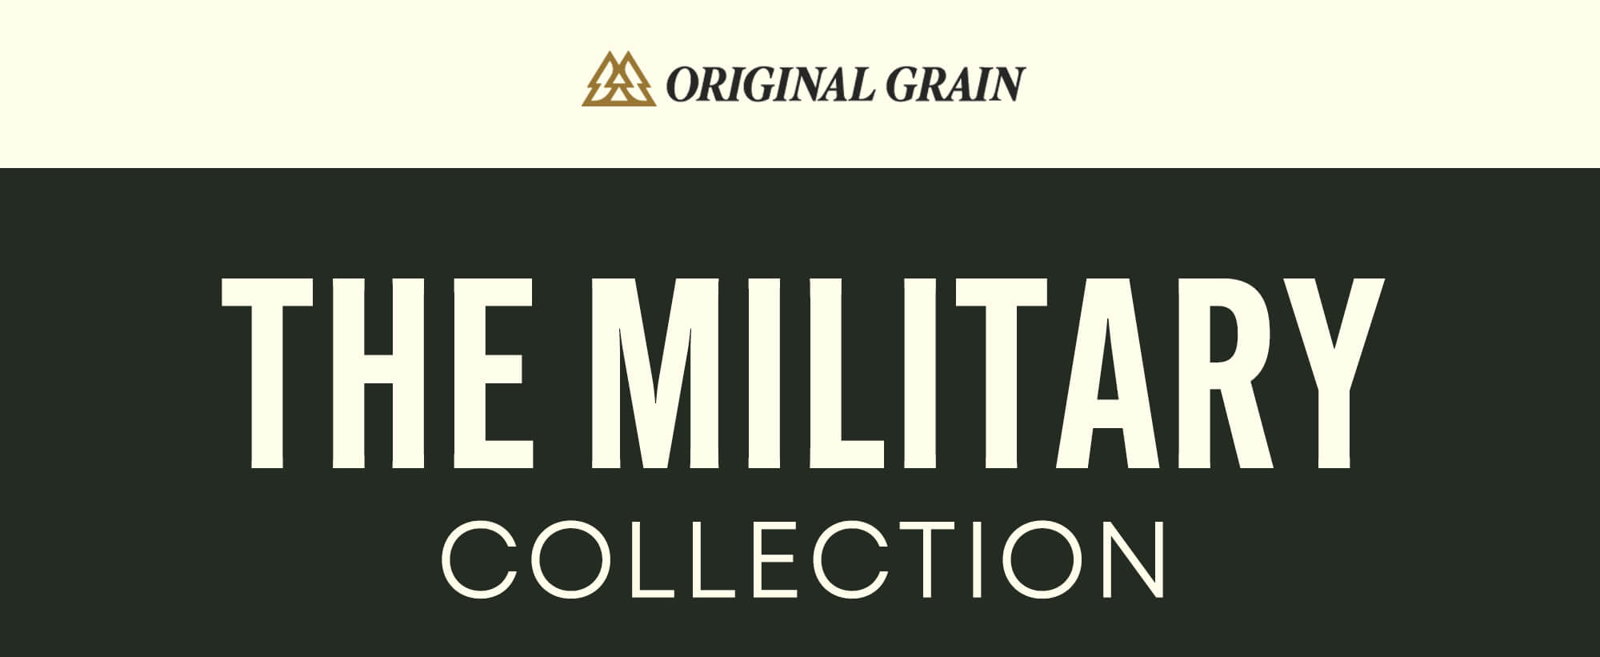 Original Grain's Military Collection